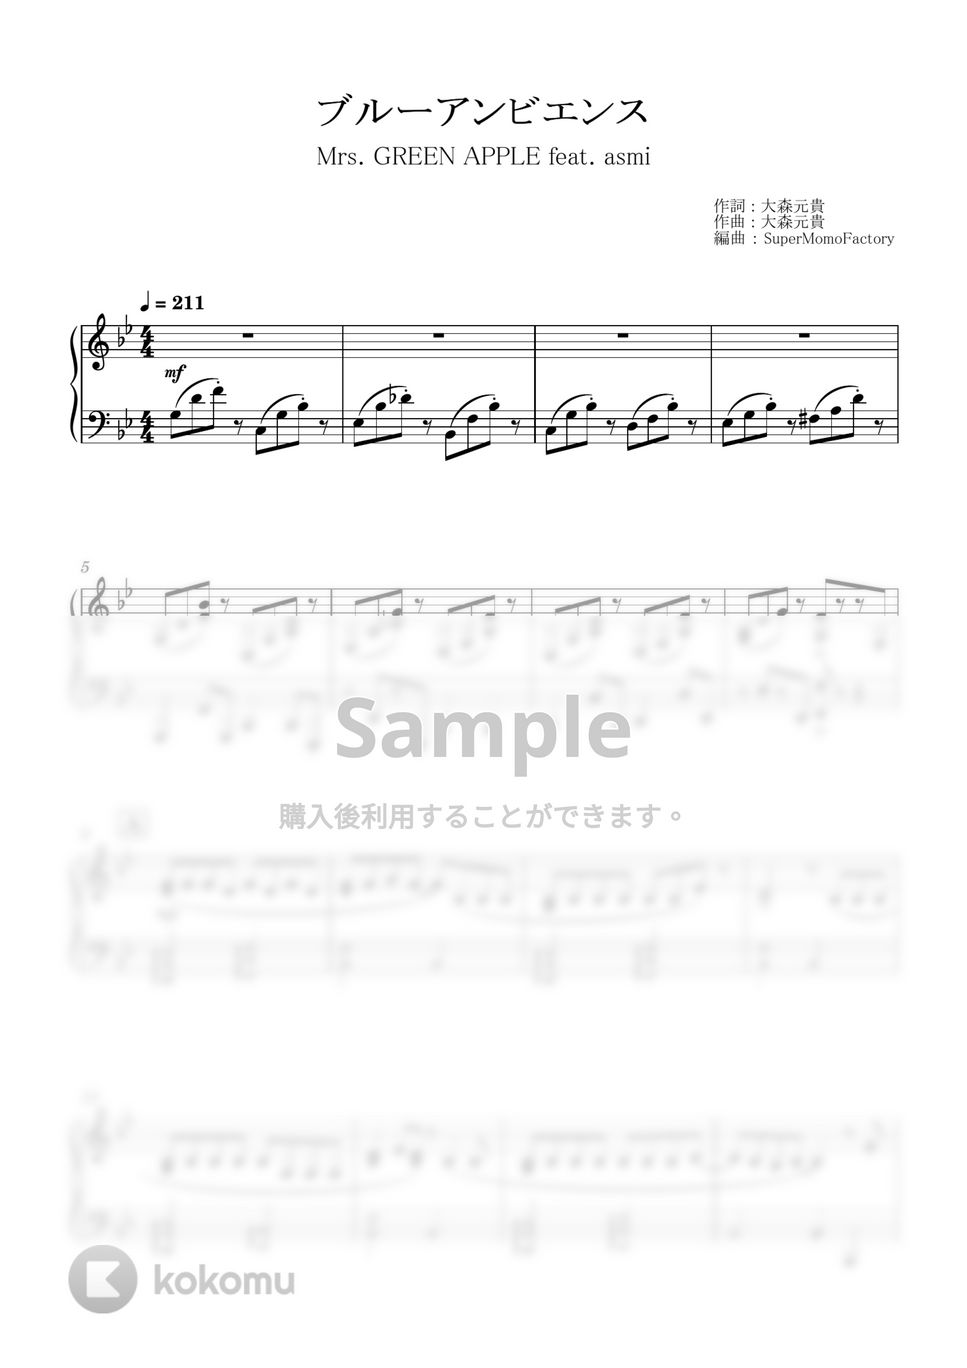 Mrs. GREEN APPLE - ブルーアンビエンス feat. asmi (ピアノソロ / 上級) by SuperMomoFactory